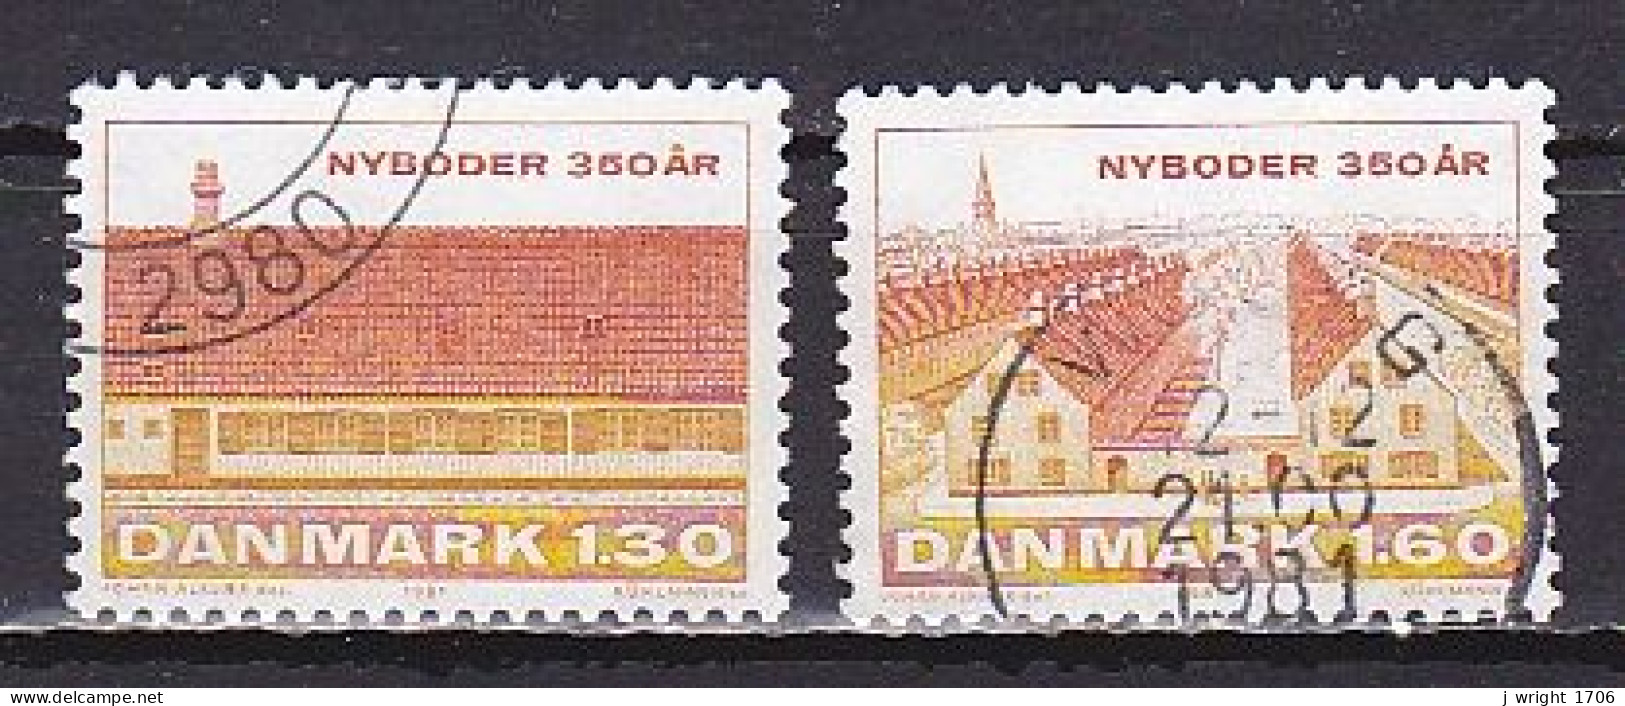 Denmark, 1981, Nyboder Naval Barracks 350th Anniv, Set, USED - Gebraucht